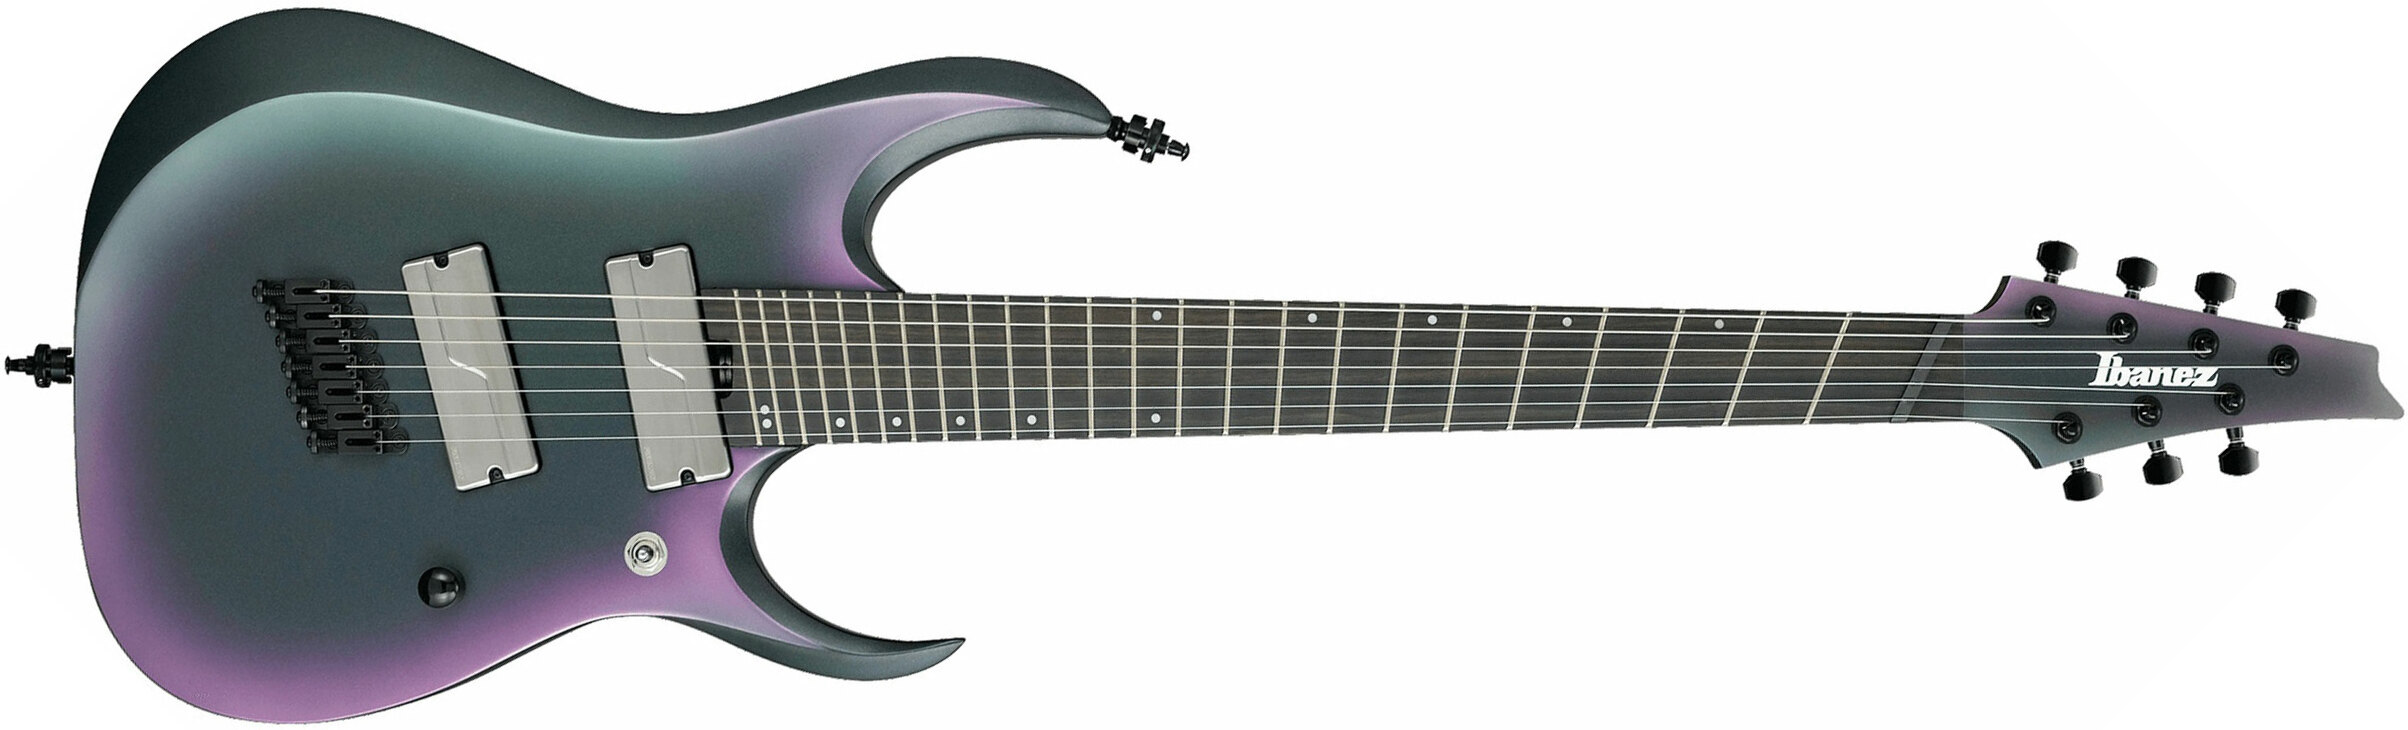 Ibanez Rgd71alms Bam Axion Label Hh Fishman Ht Eb - Black Aurora Burst Matte - Multi-scale gitaar - Main picture